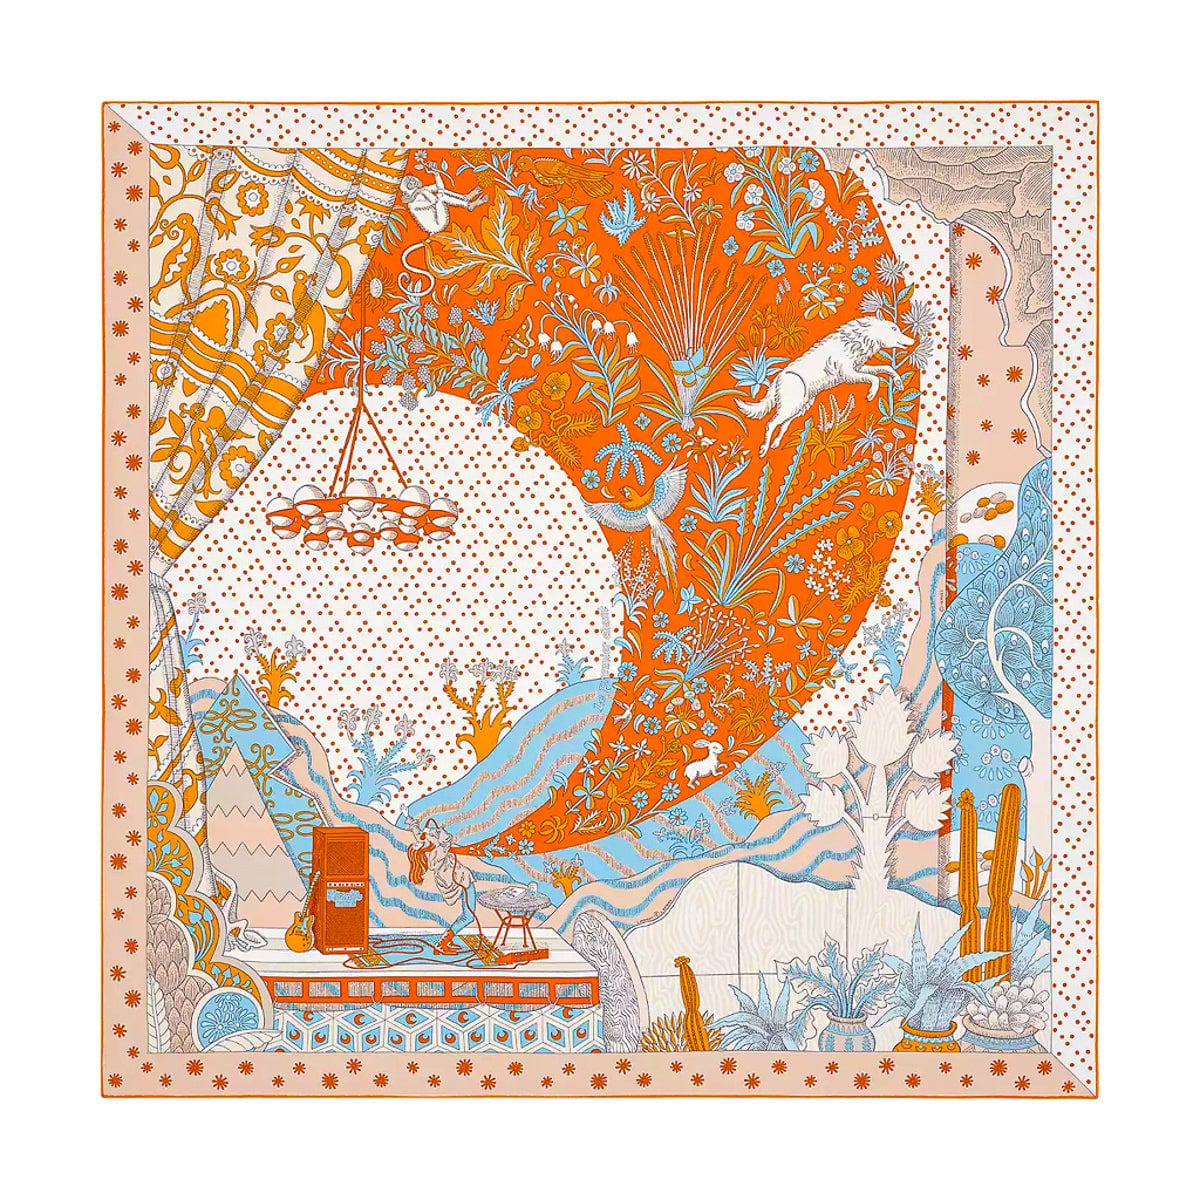 Hermes Pillow Silk Scarf Print Les Rubans du Cheval Vintage – Mightychic